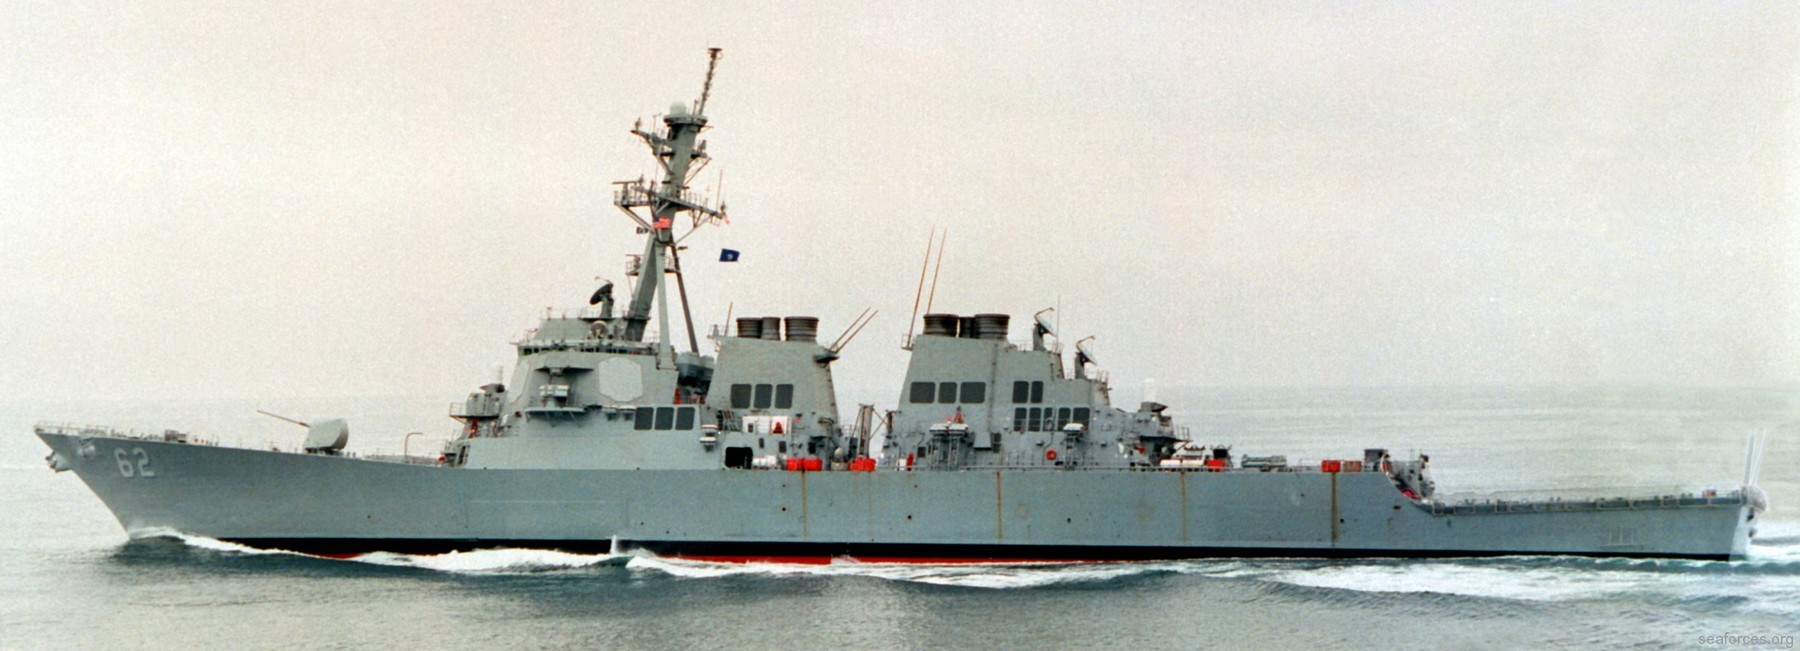 ddg-62 uss fitzgerald guided missile destroyer 1995 119 sea trials bath iron works maine